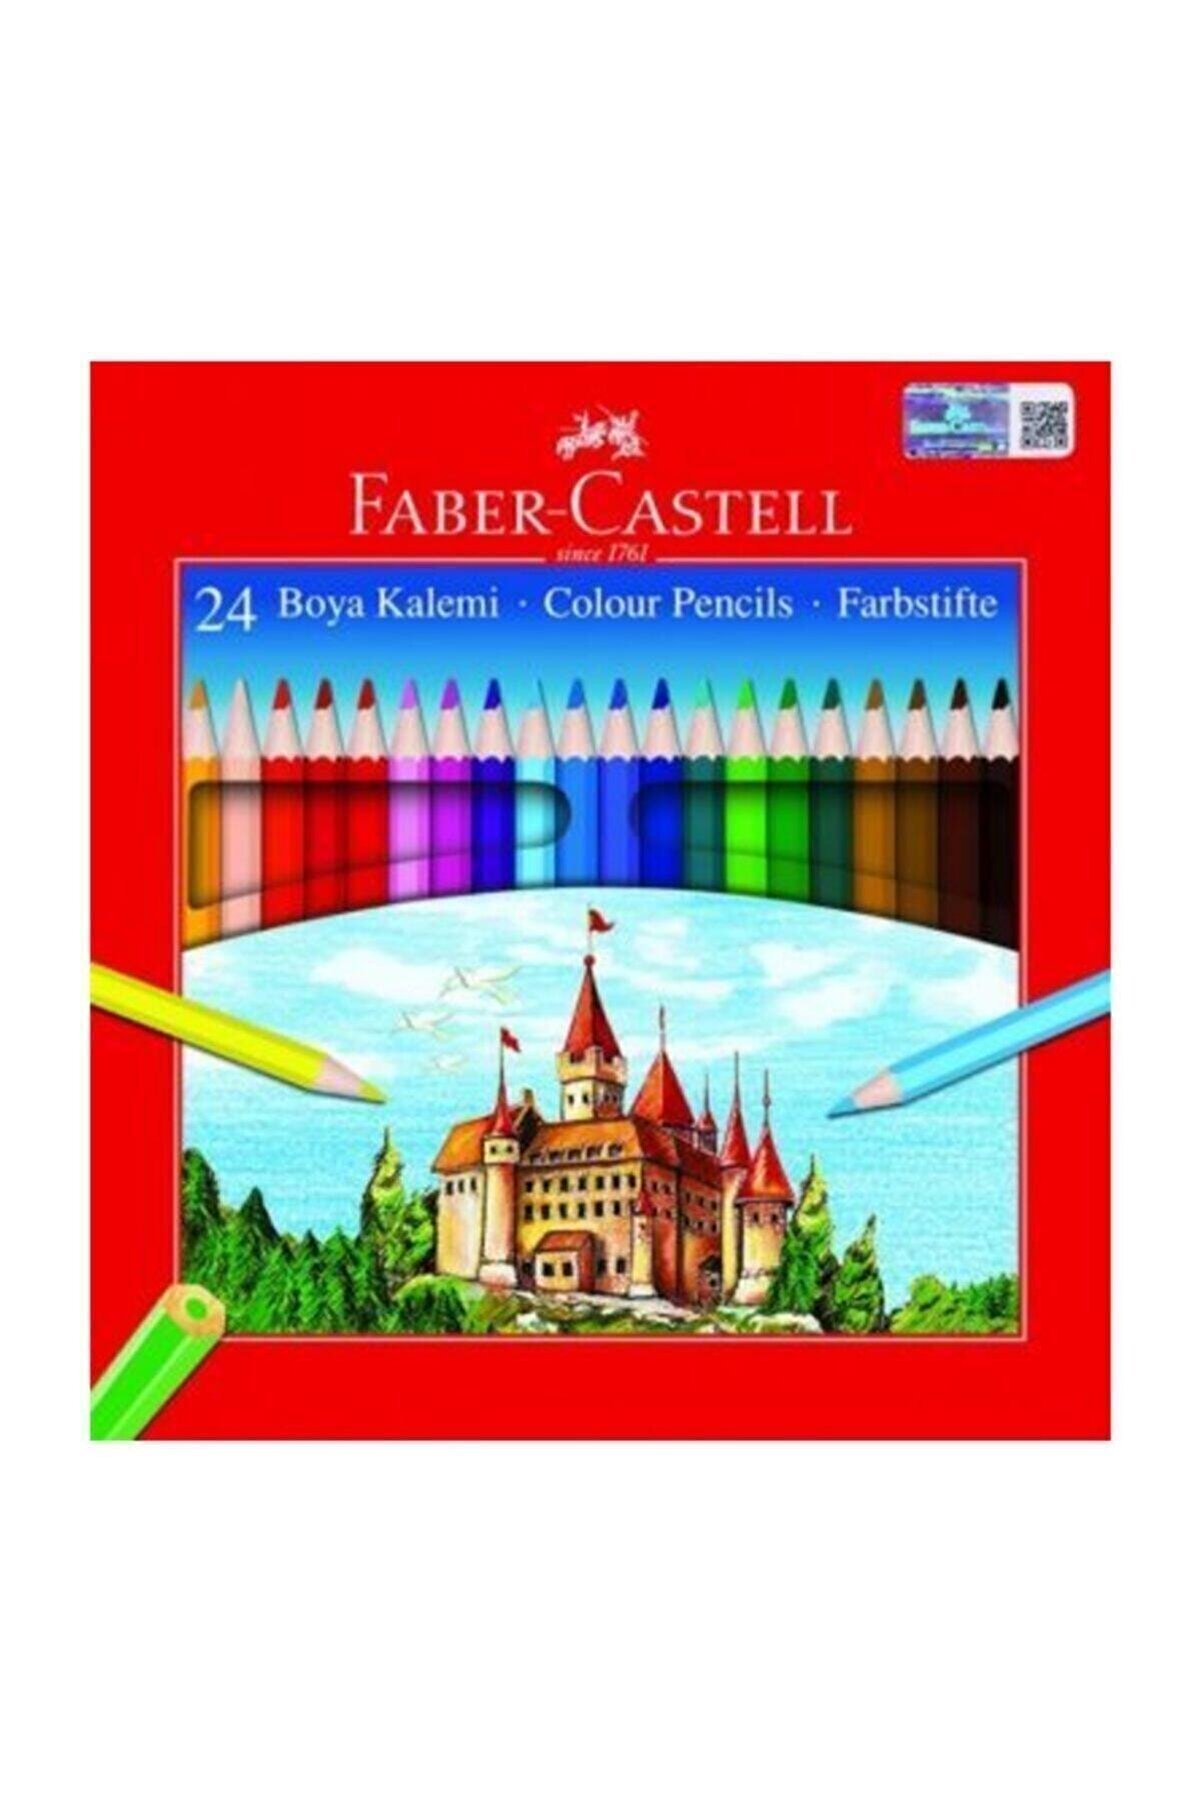 Faber Castell Karton Kutu Kuru Boya Tam Boy 24 Renk 116324 5171